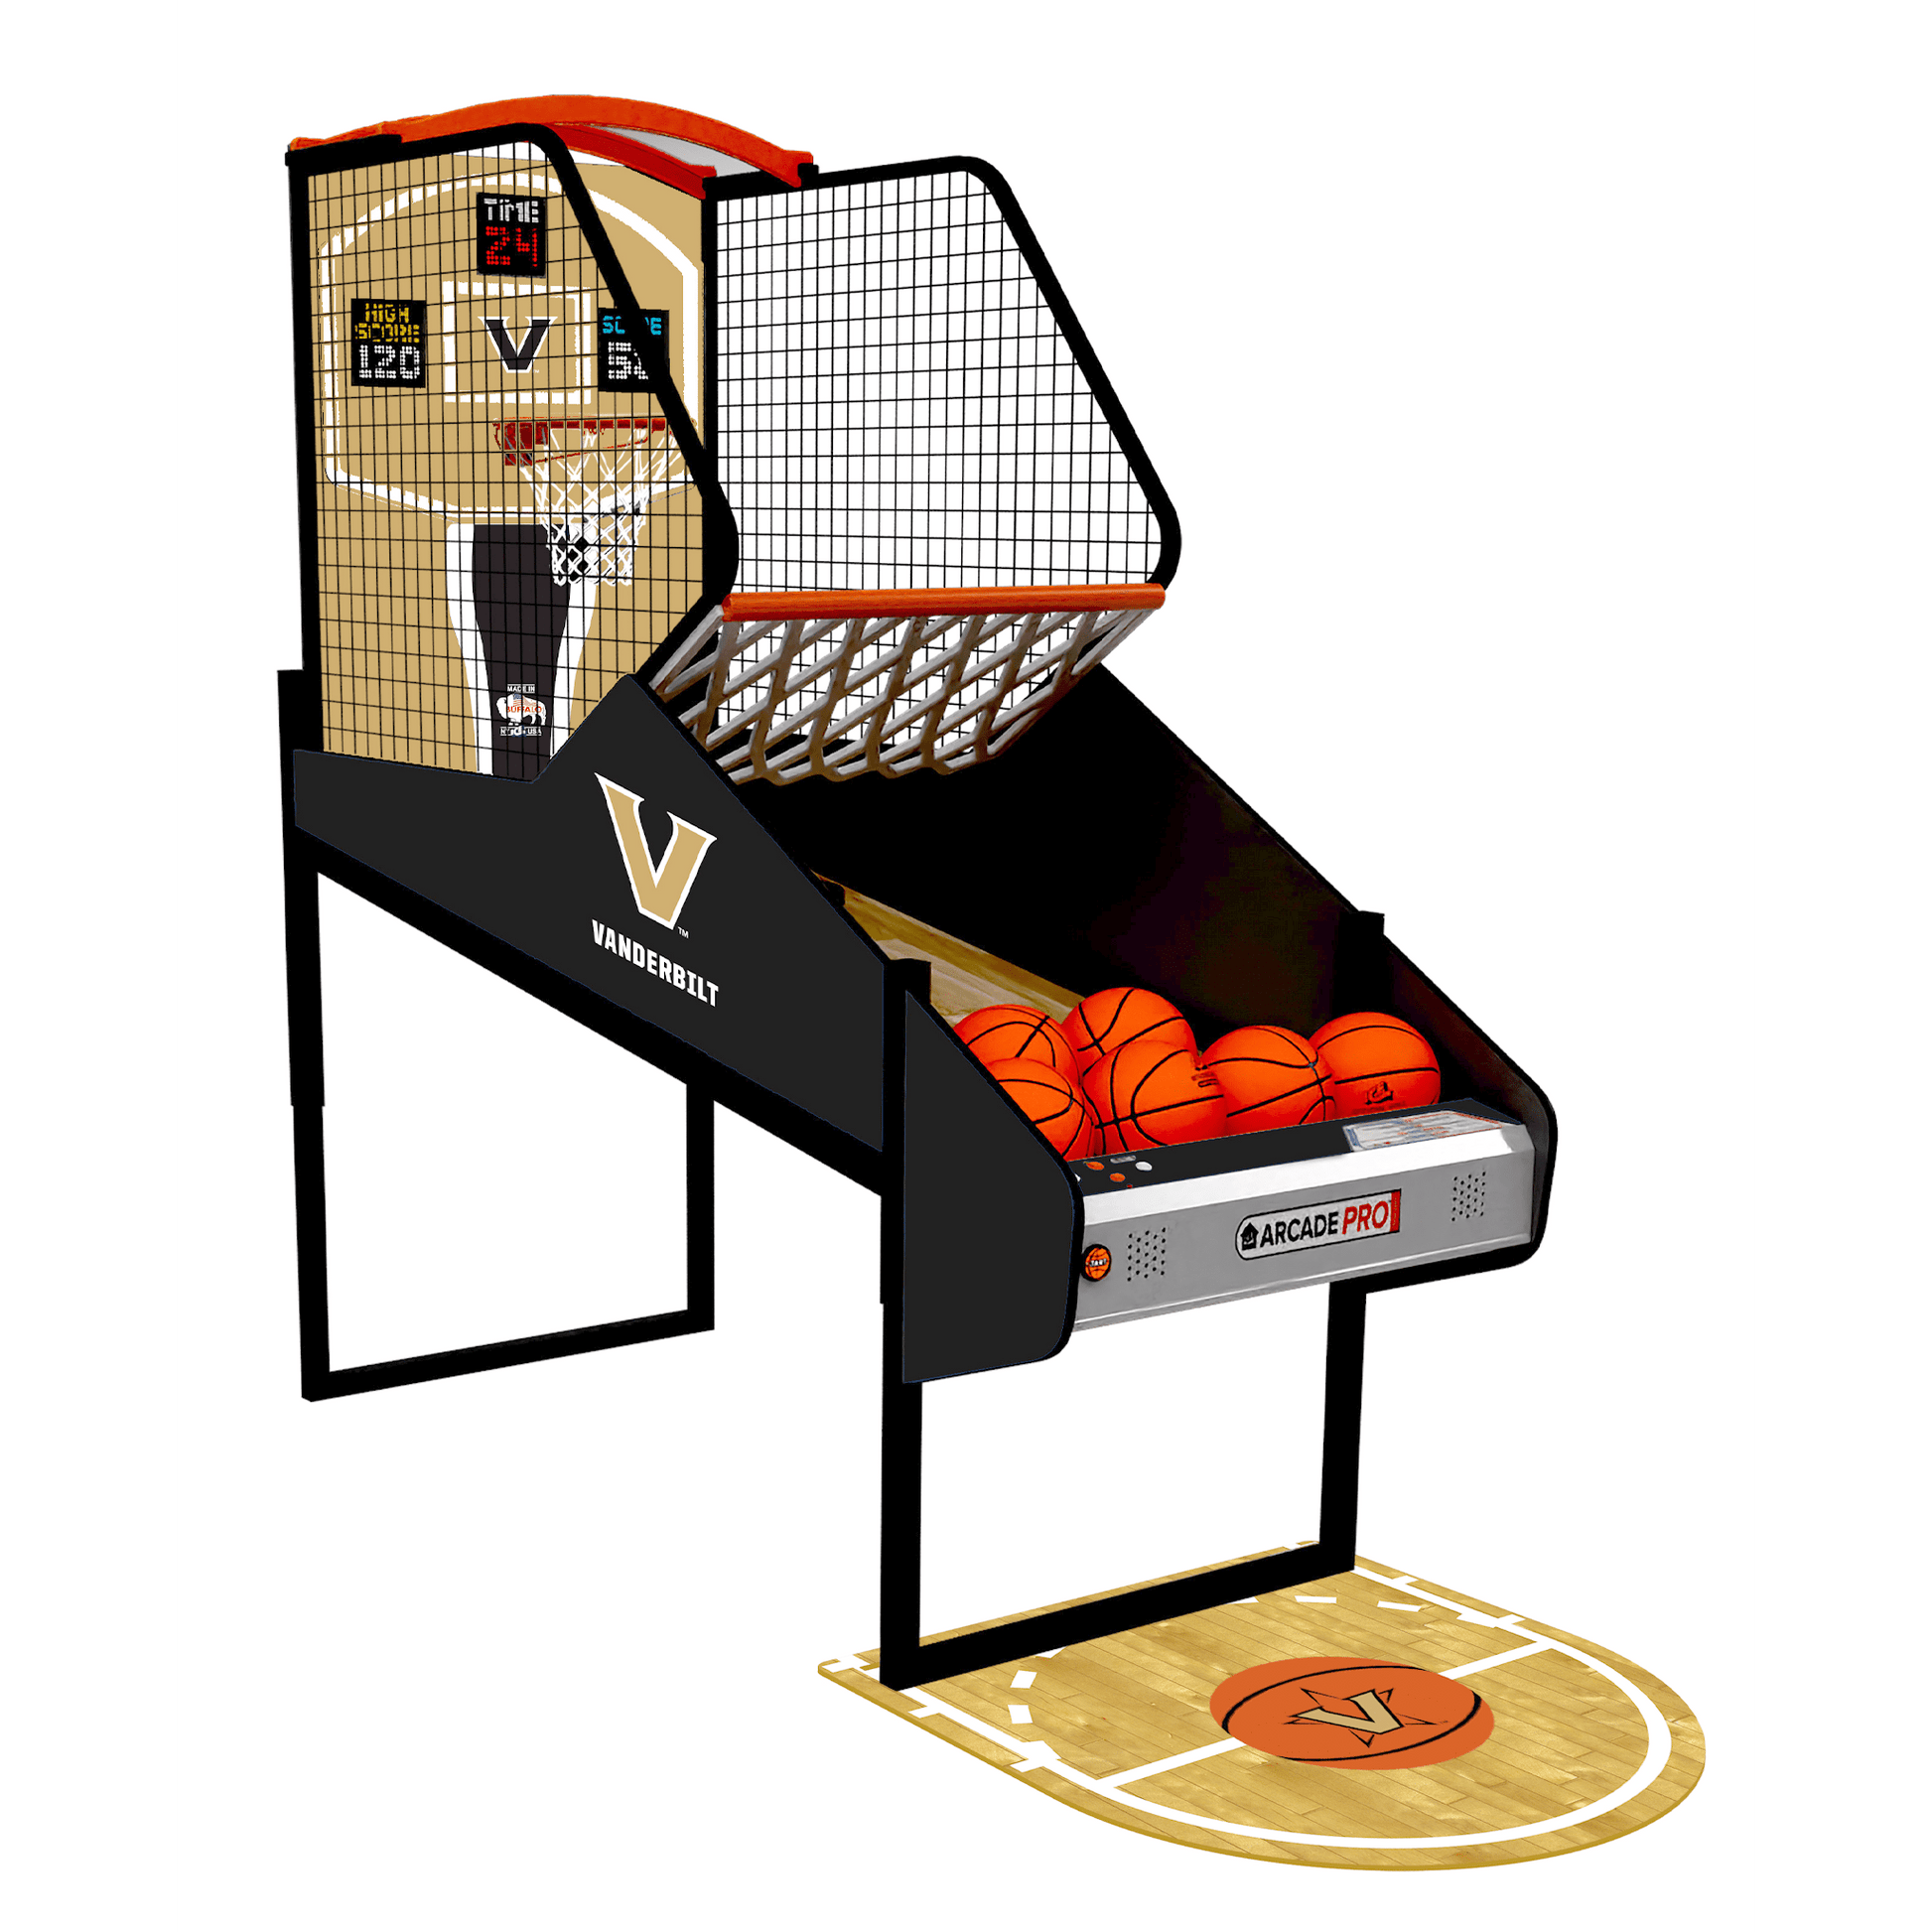 Vanderbilt University College Hoops Arcade Innovative Concepts in Entertainment   